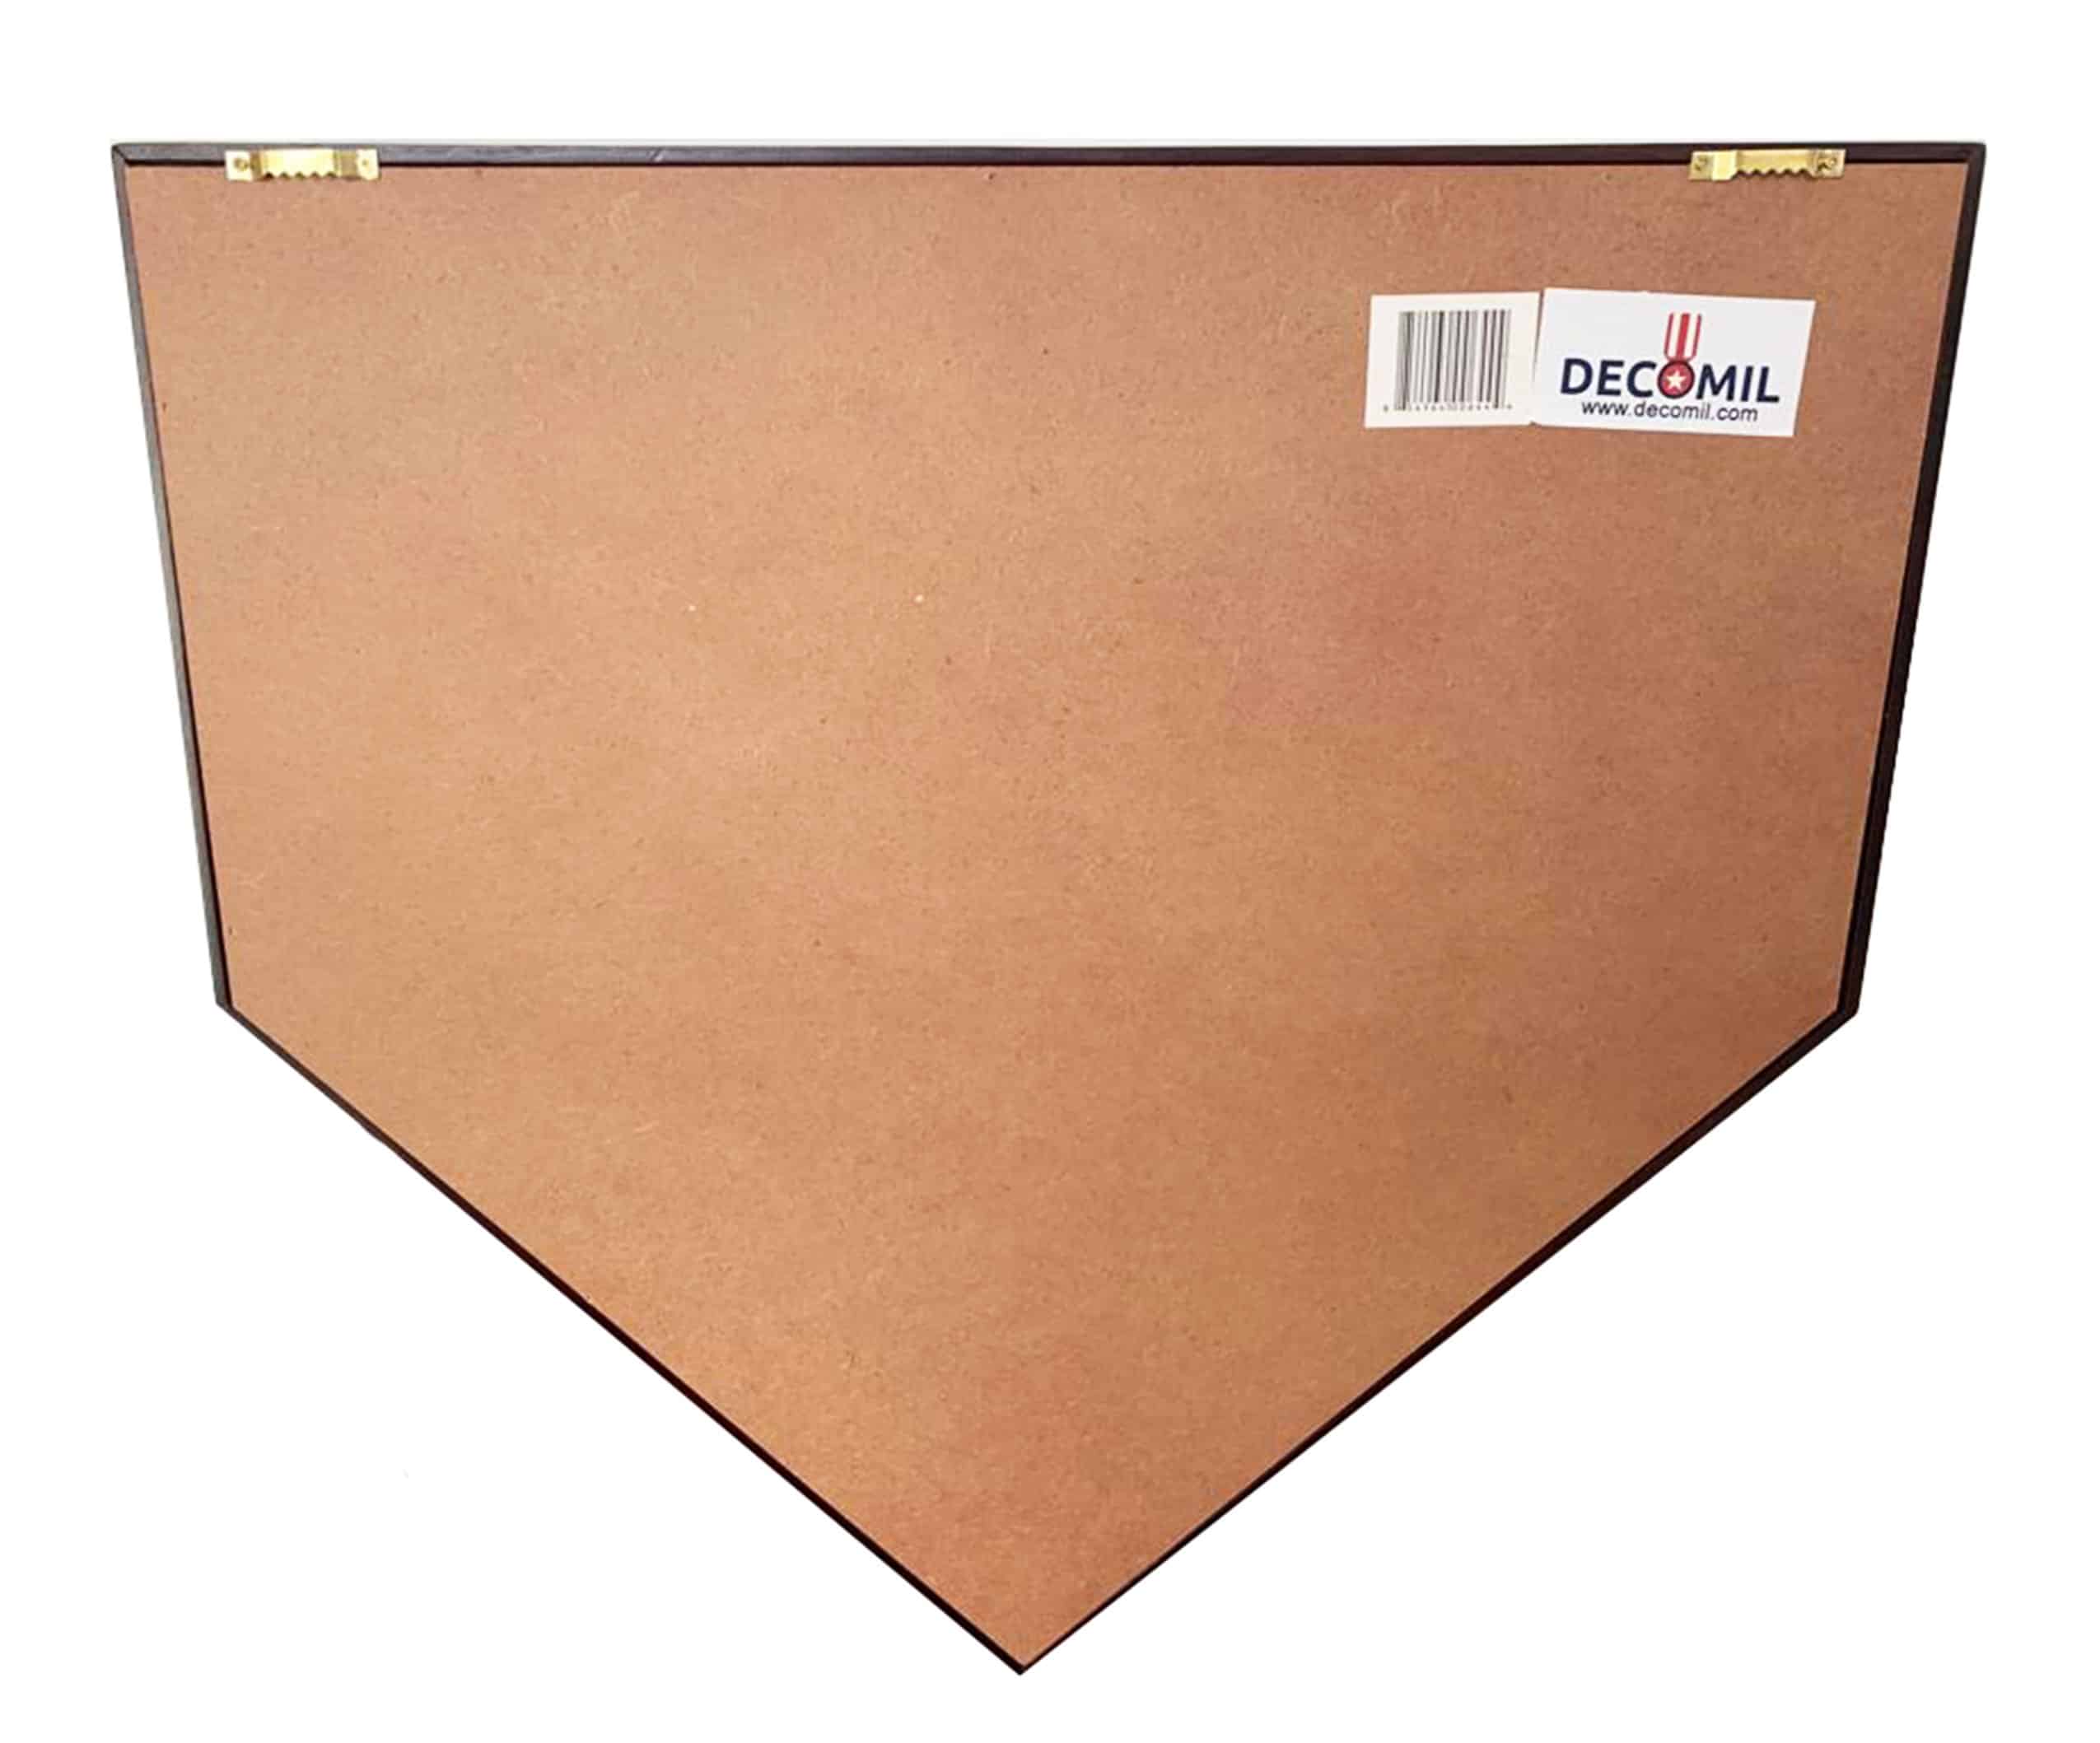  21 Baseball Display Case (Solid Wood)  Wall Cabinet Holder 5